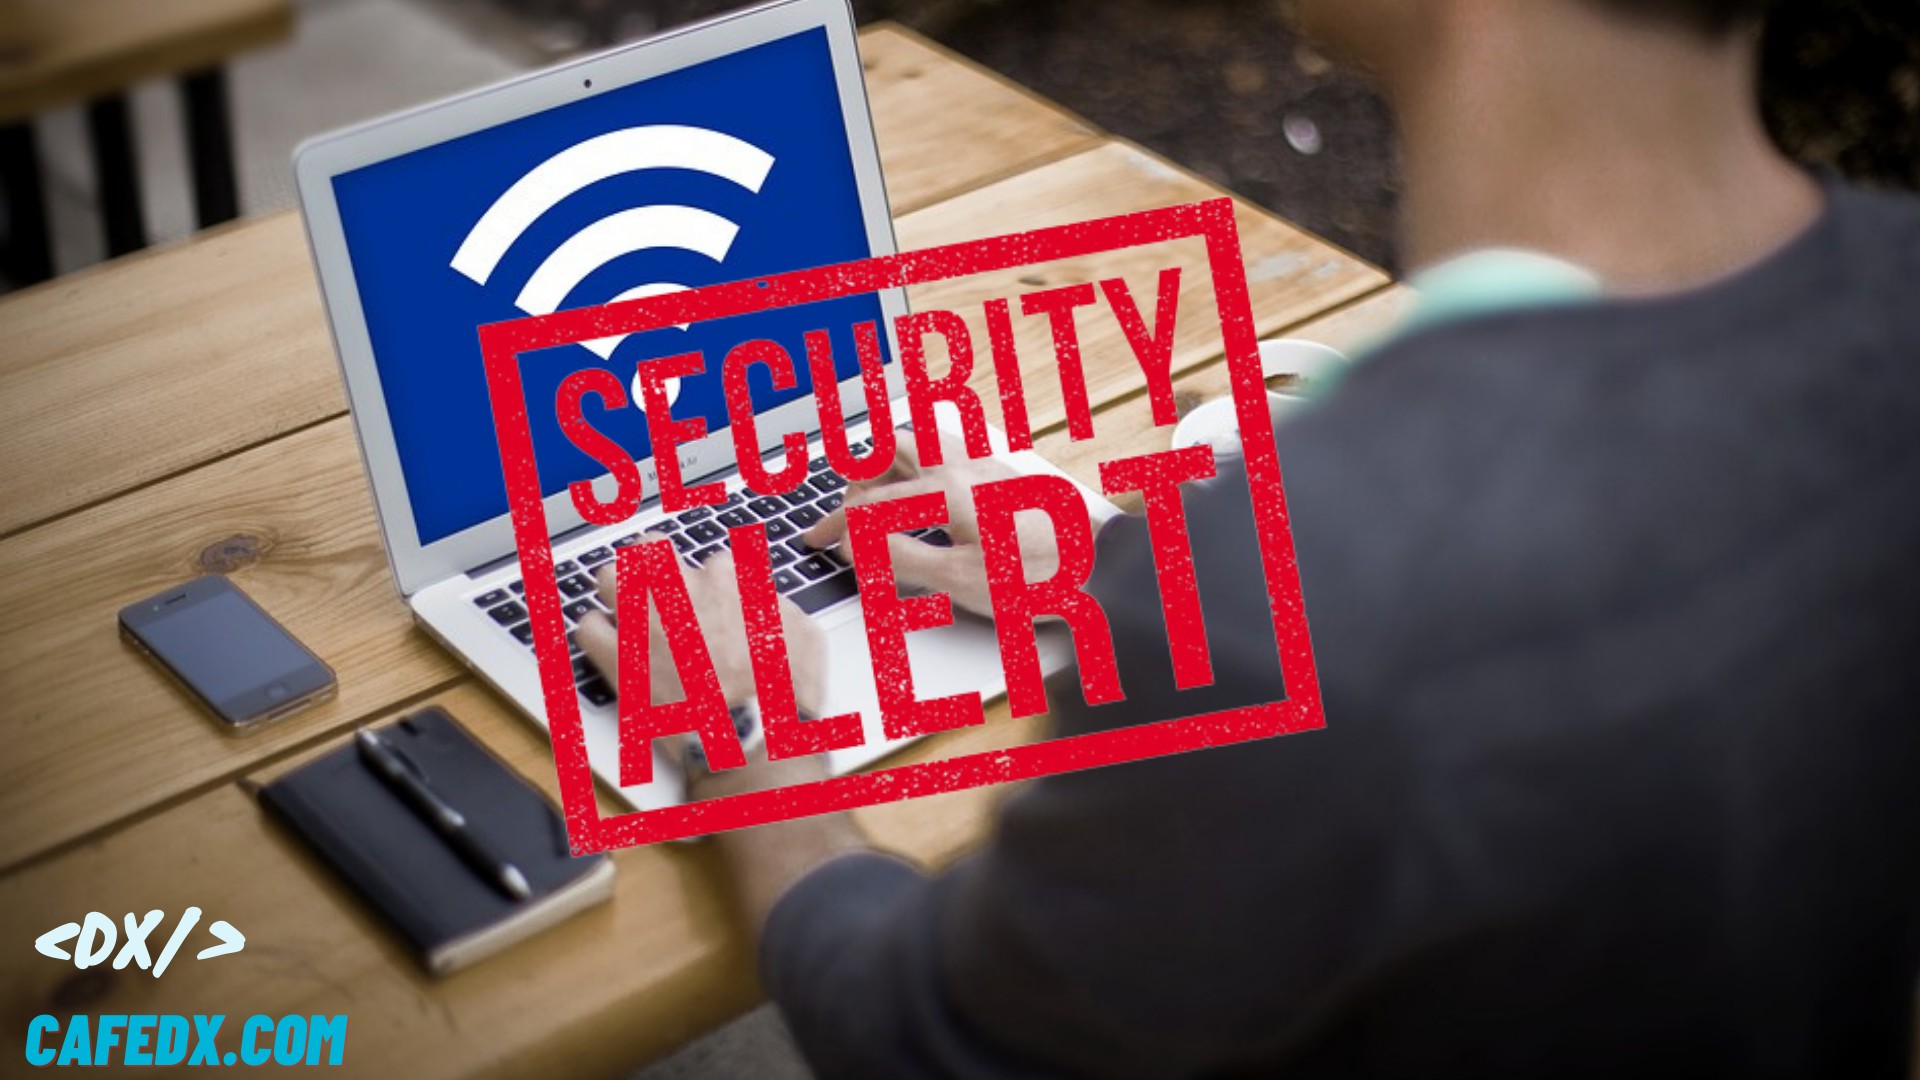 wifi security alert tip1